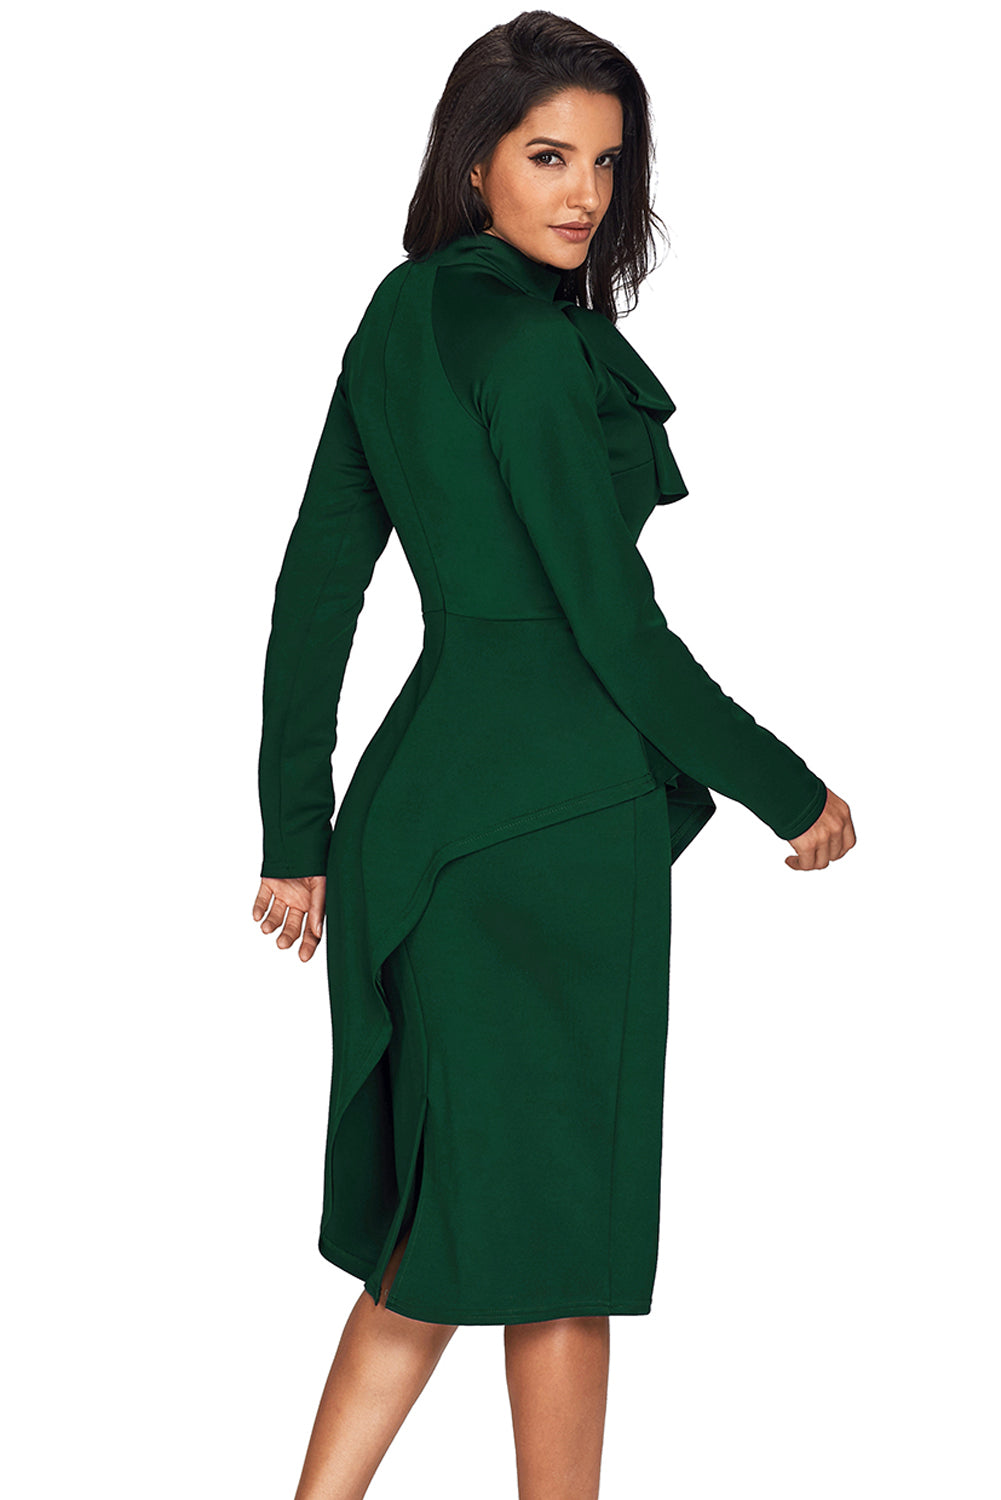 Jade Green Asymmetric Peplum Style Pussy Bow Dress